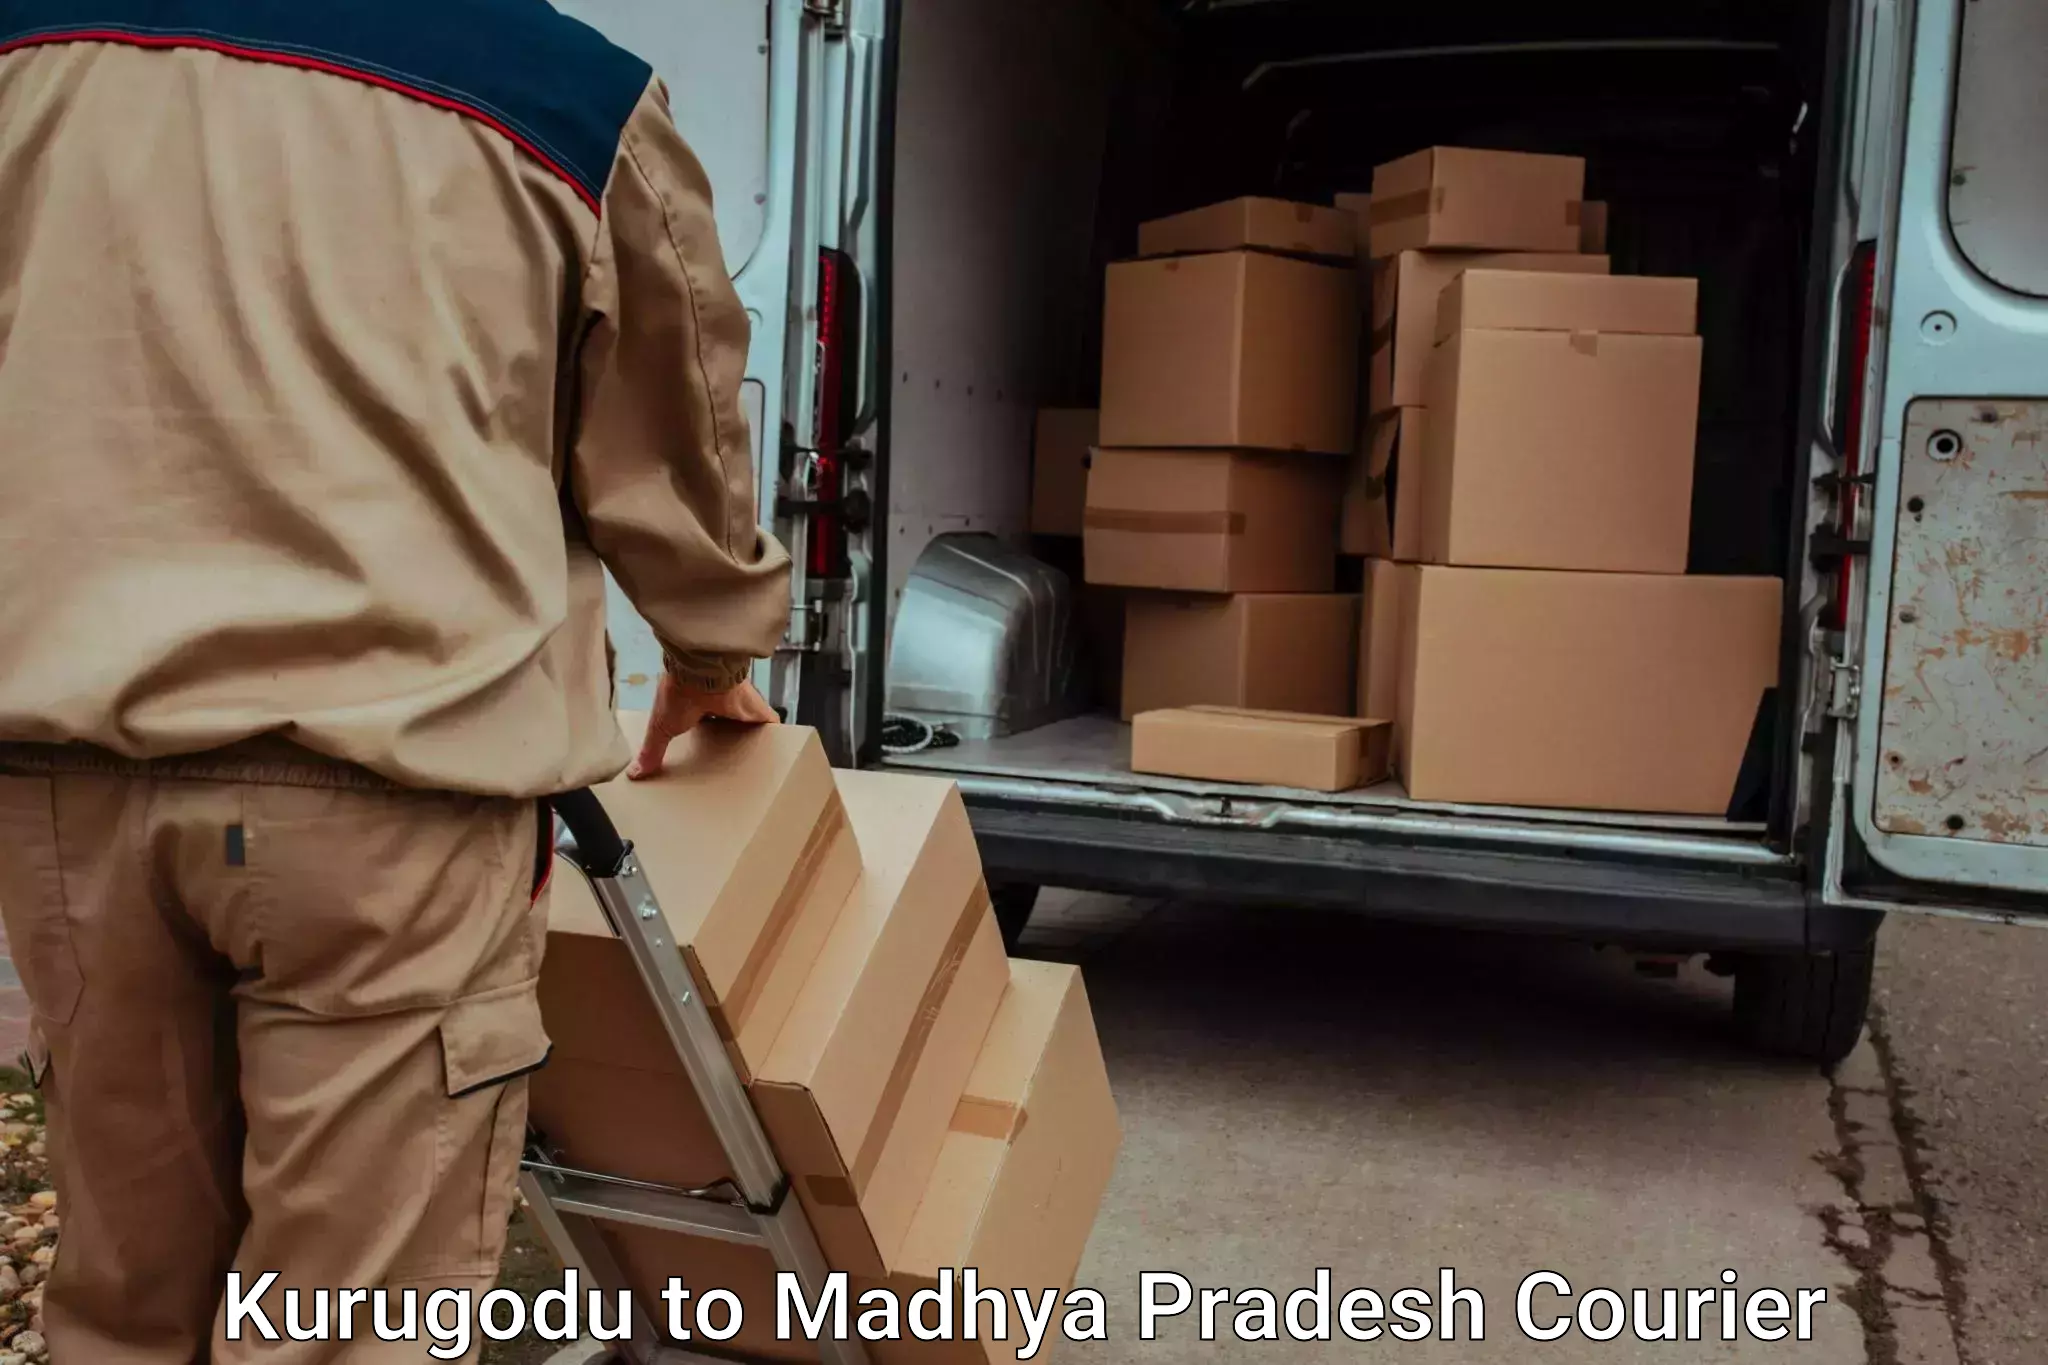 Trusted moving company Kurugodu to Gwalior